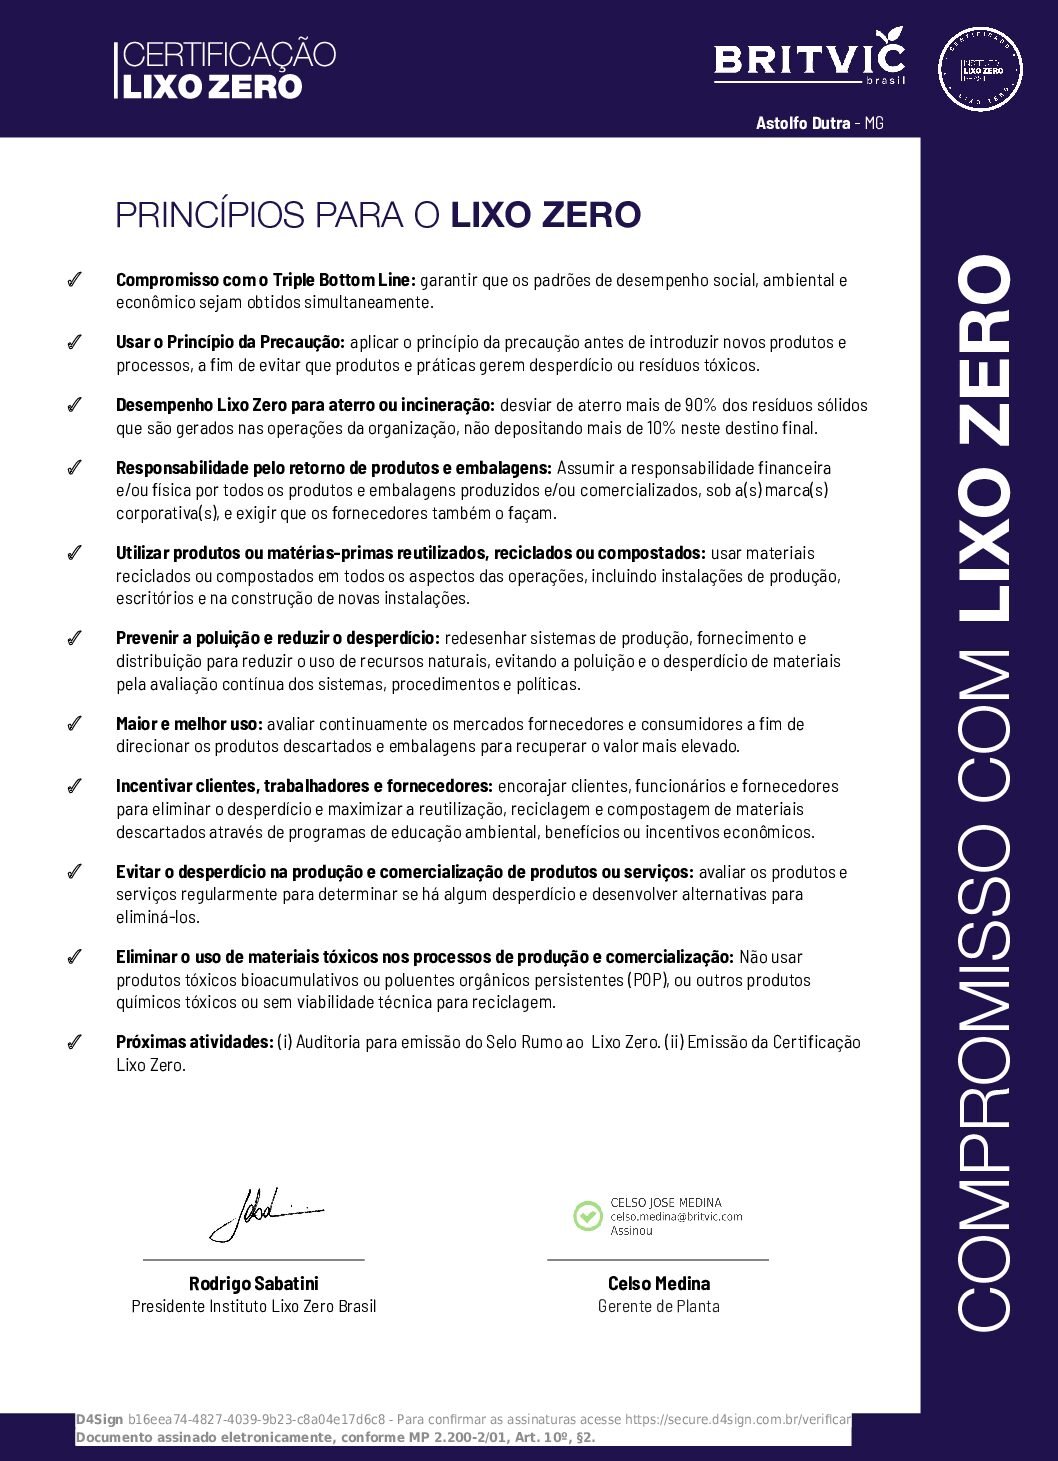 CompromissoLixoZero-BRITVIC-Astolfo-Dutra-MG-MAIO-2023-pdf-D4Sign_signed-1